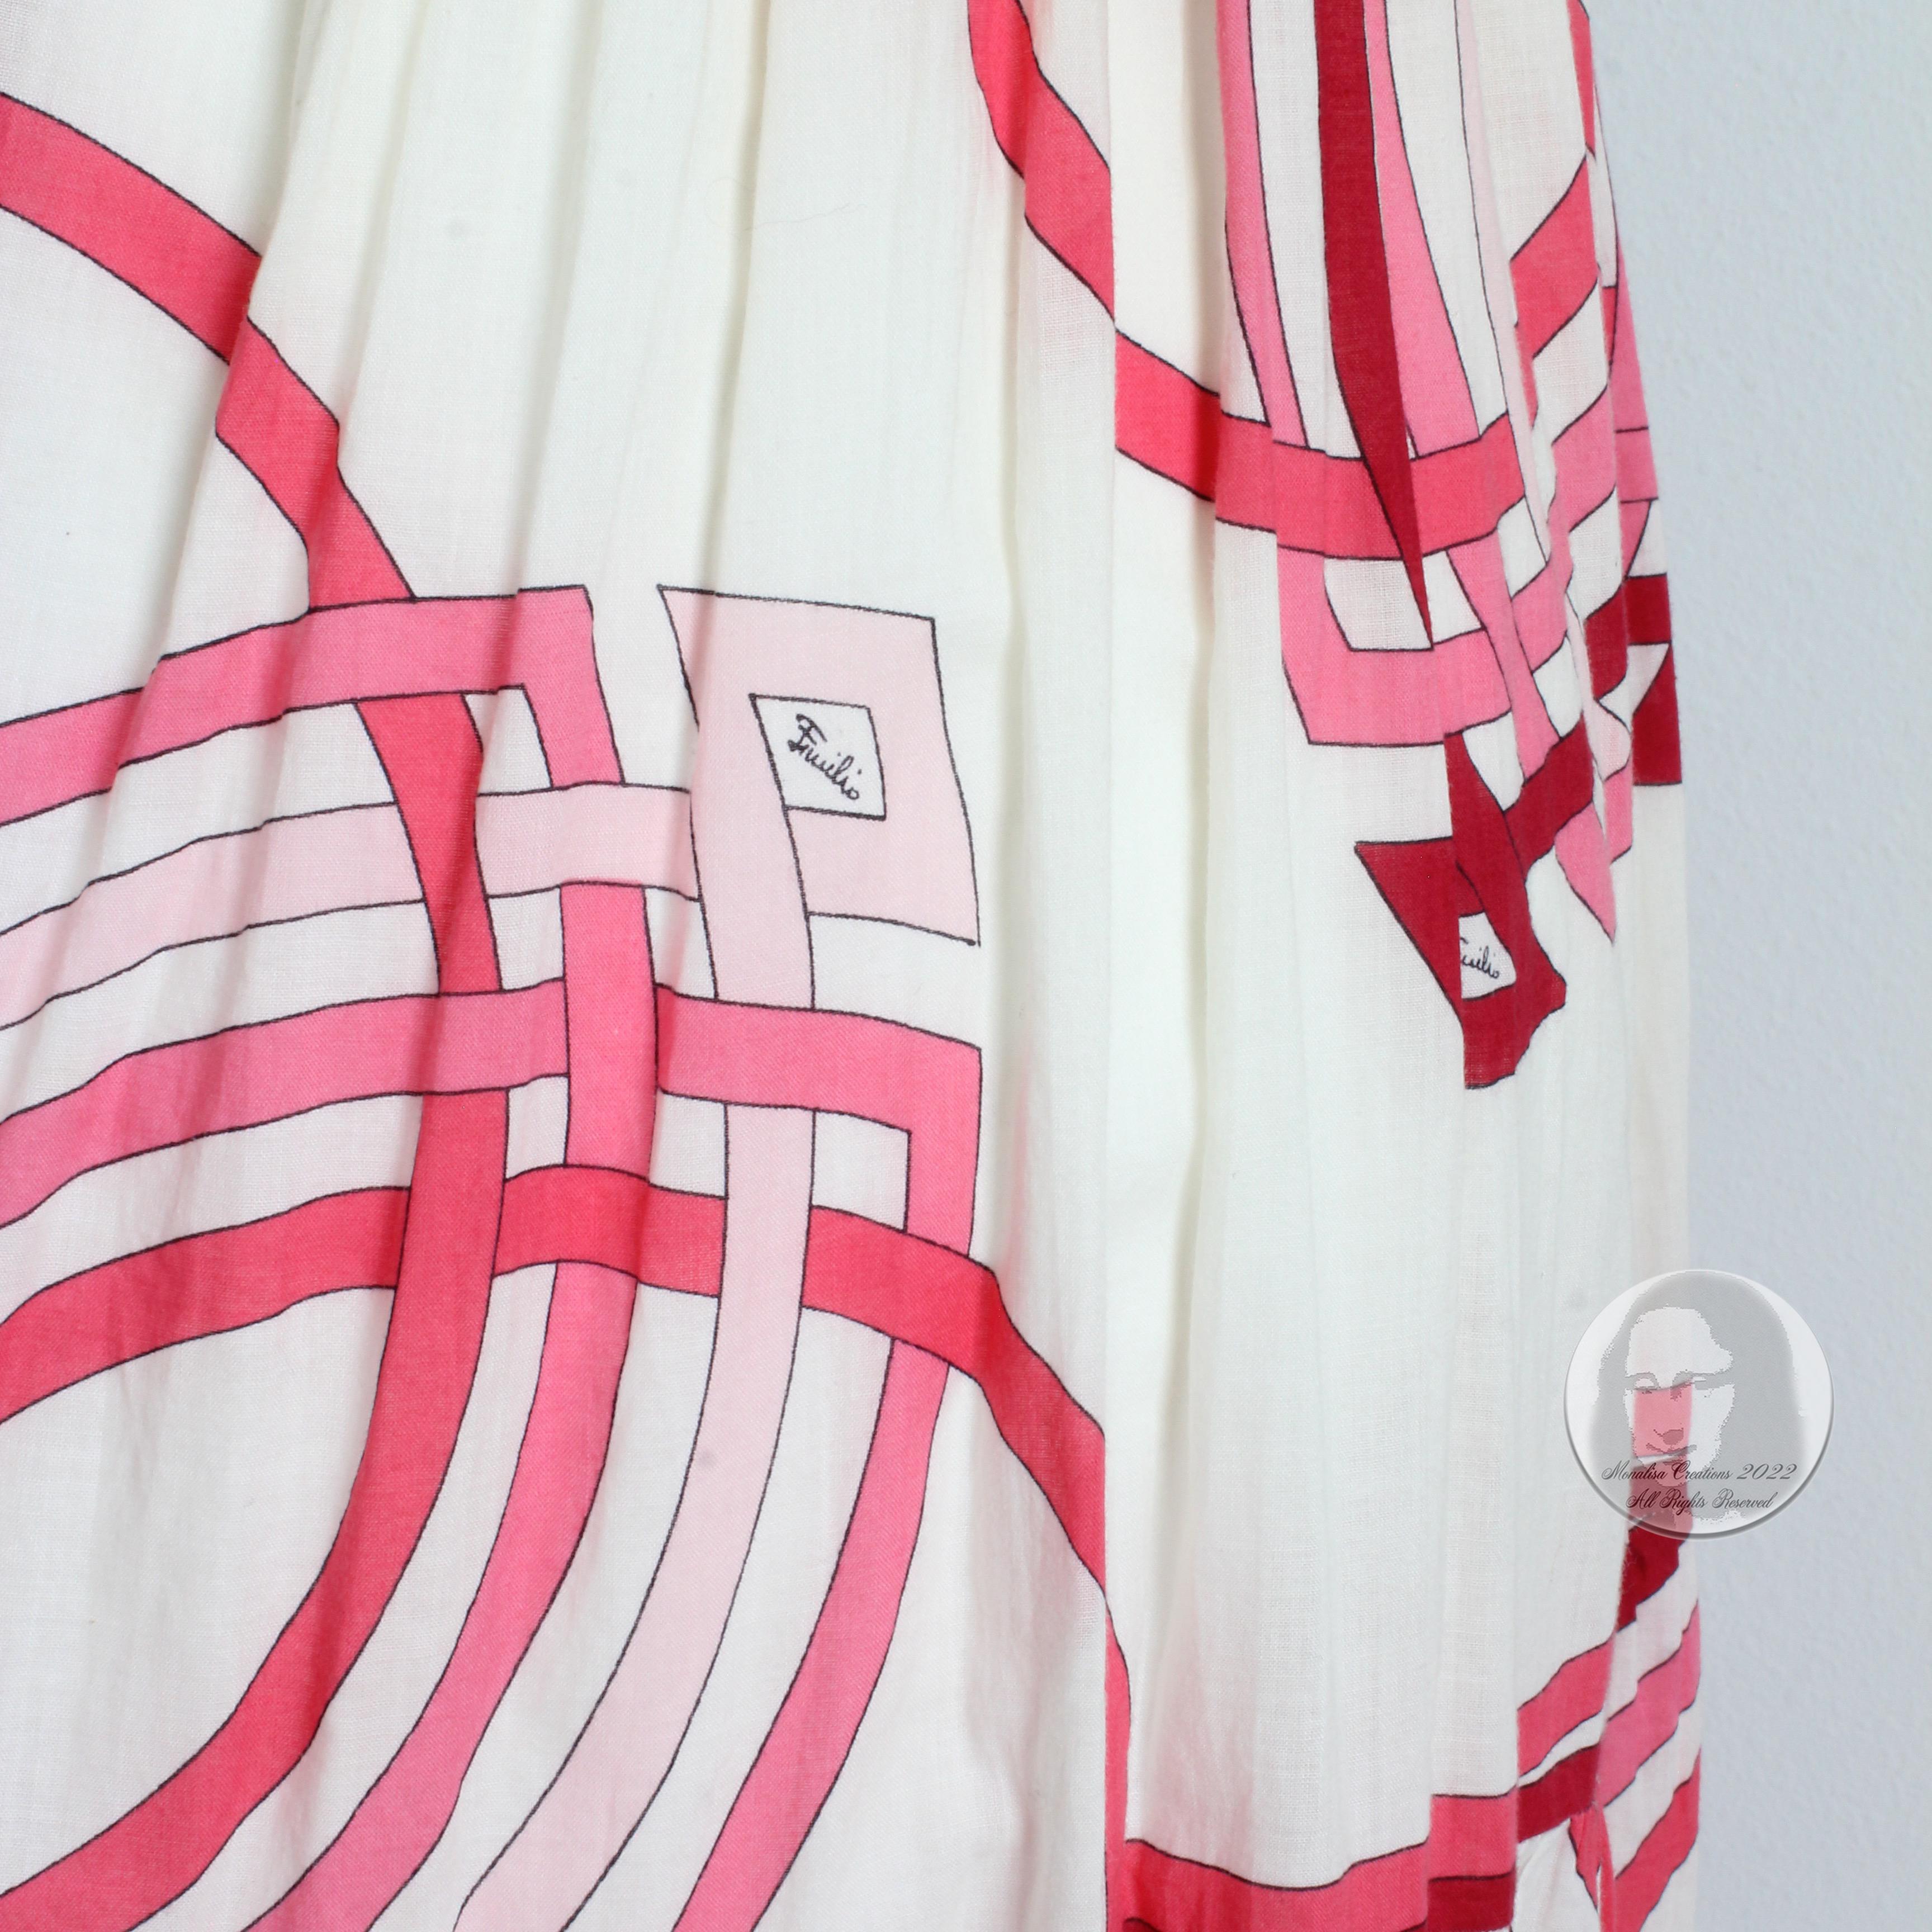 Emilio Pucci Dress Sundress Pink Abstract Print Cotton Spaghetti Strap 70s  4